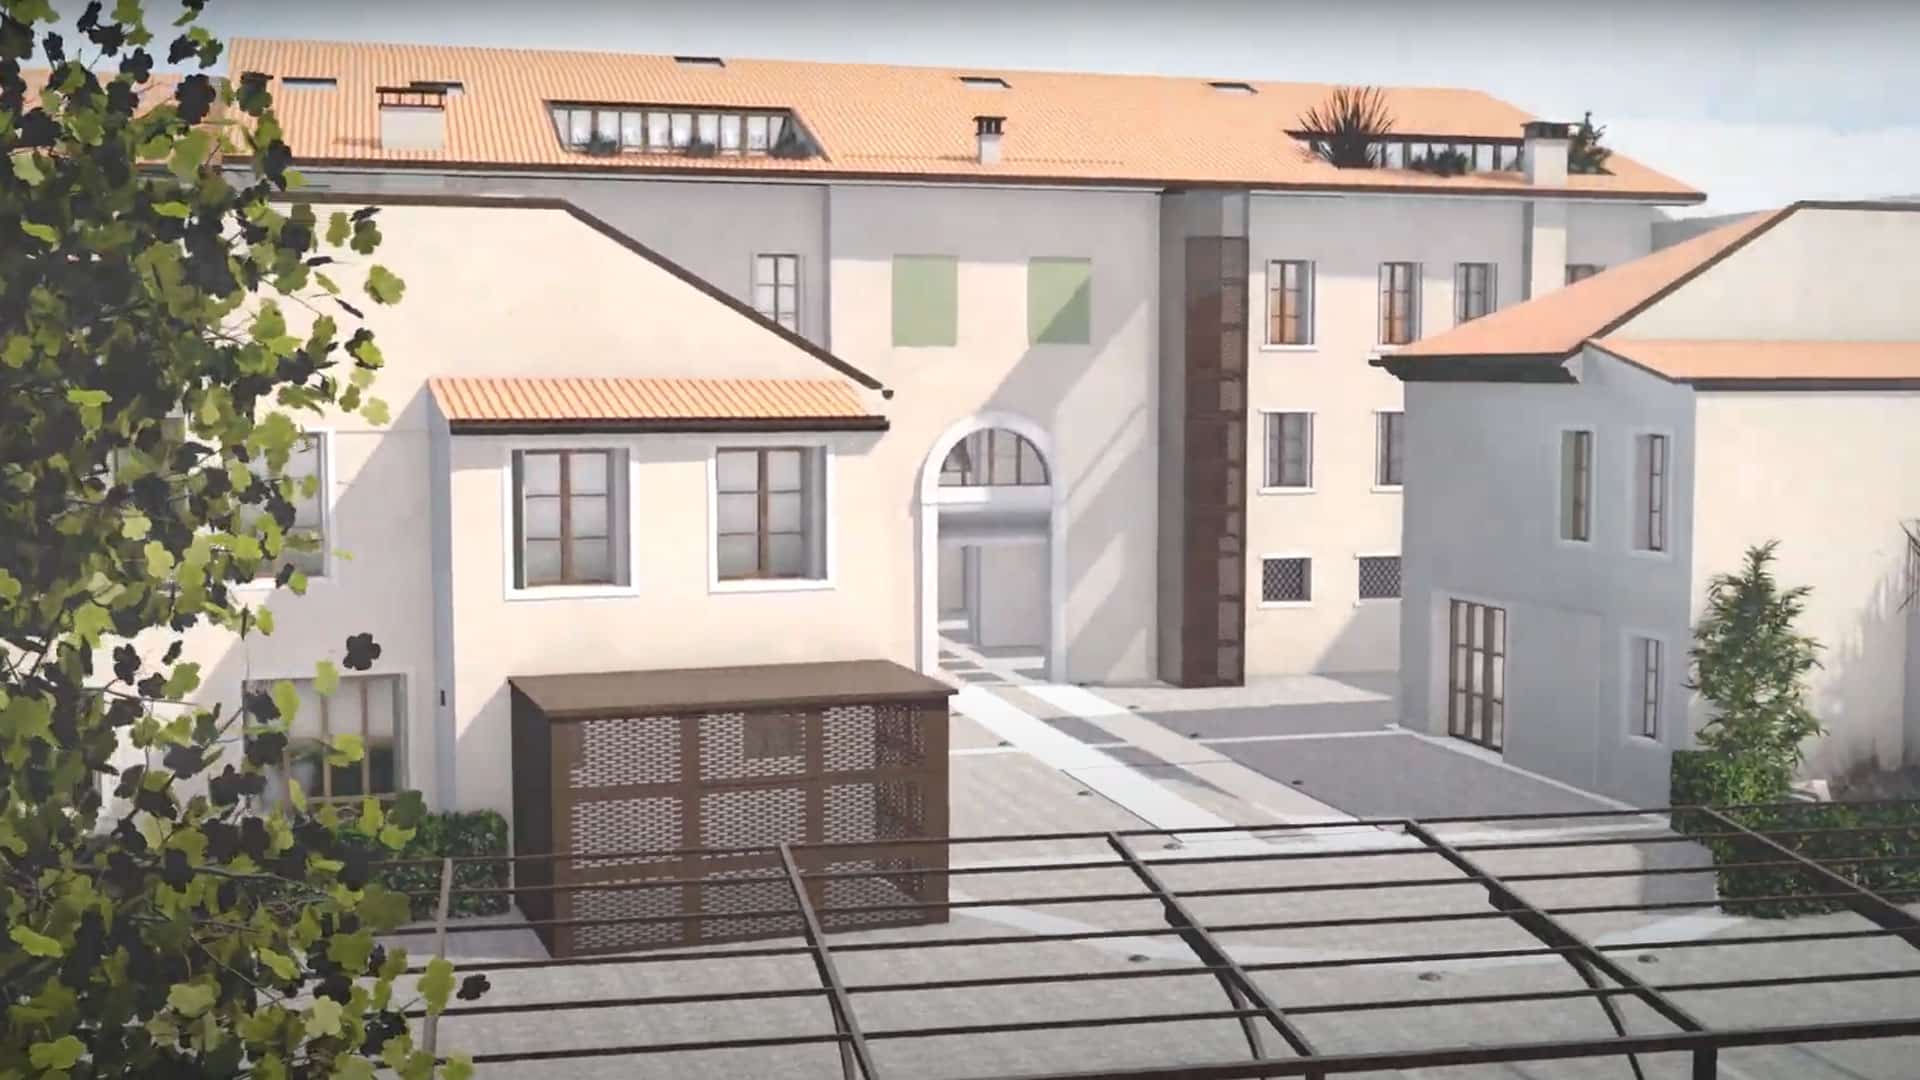 LDLBUILDING - Video Animato Architettonico